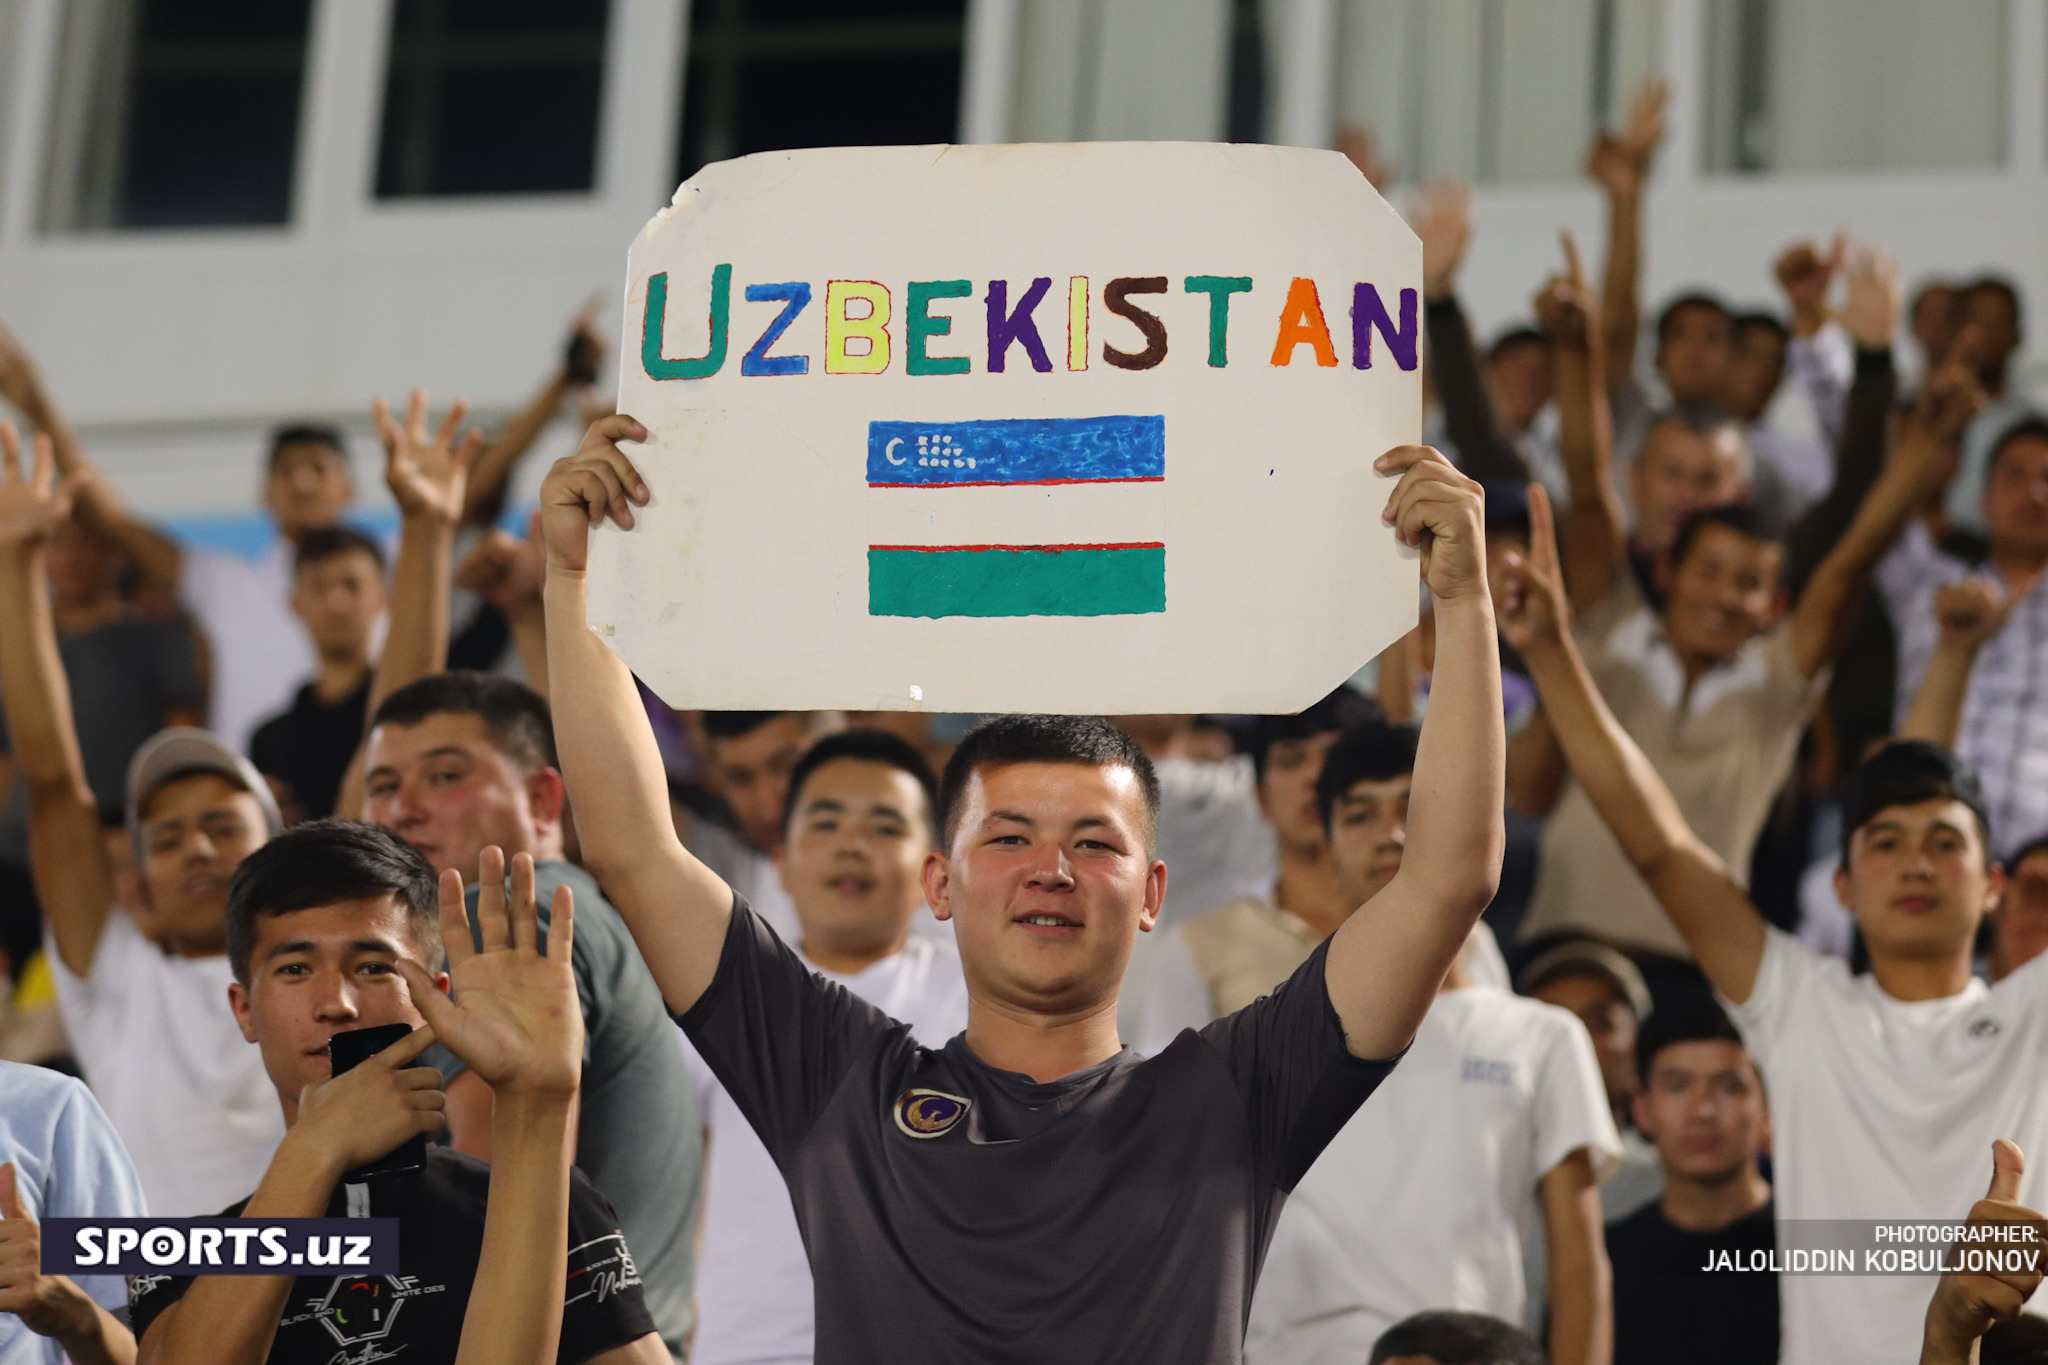 Uzbekistan - Iran muhlislar